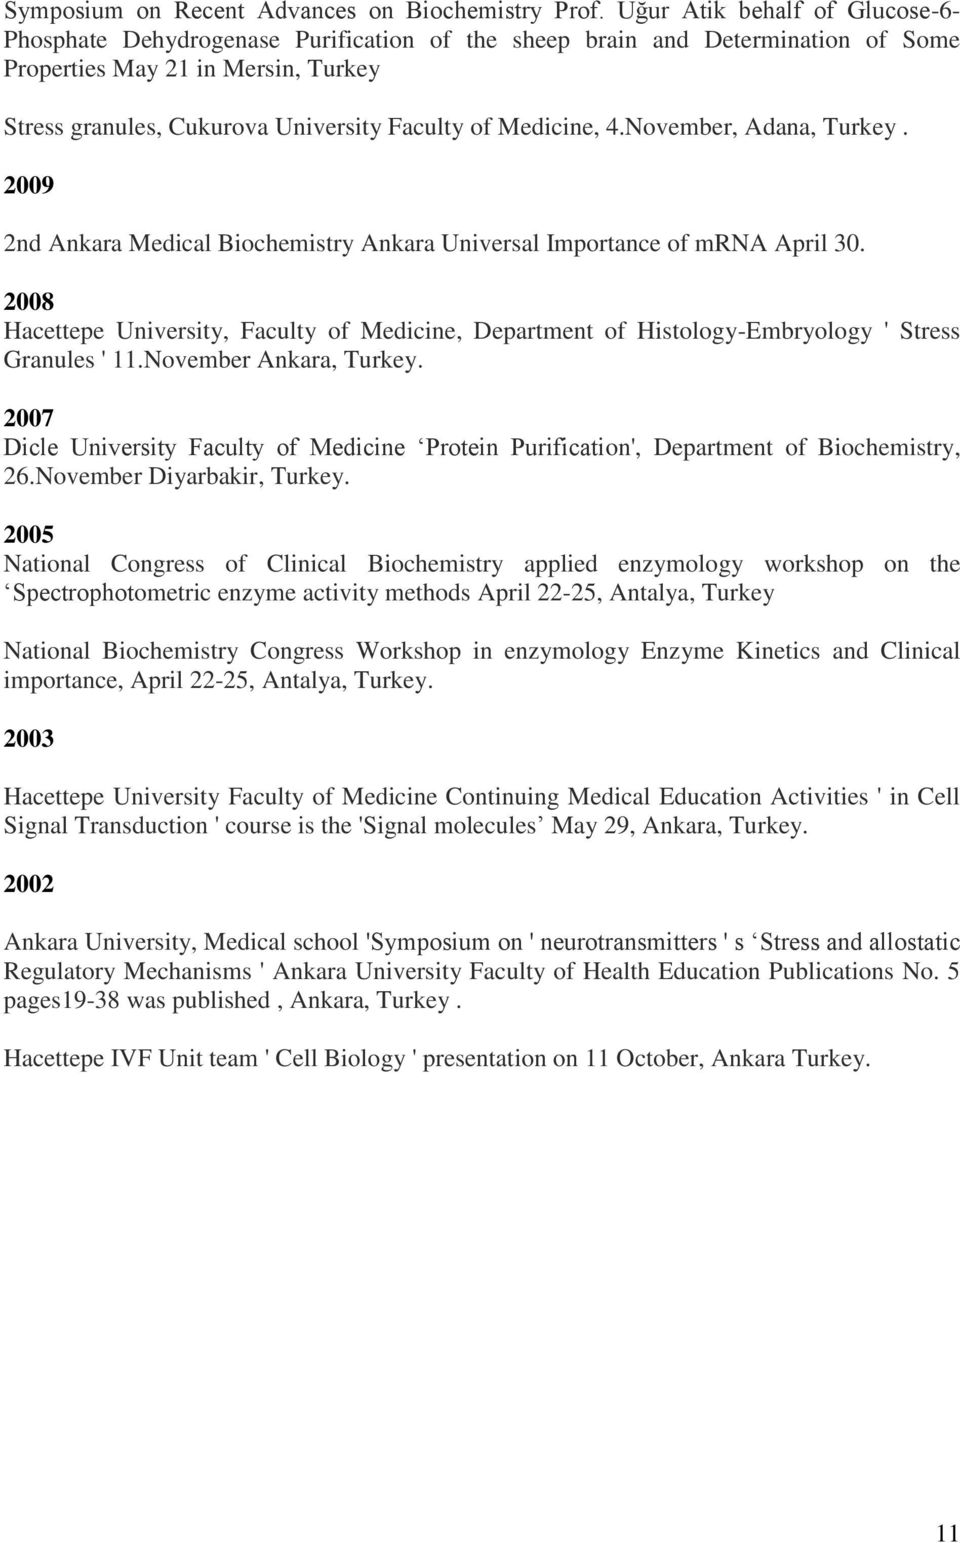 Medicine, 4.November, Adana, Turkey. 2009 2nd Ankara Medical Biochemistry Ankara Universal Importance of mrna April 30.